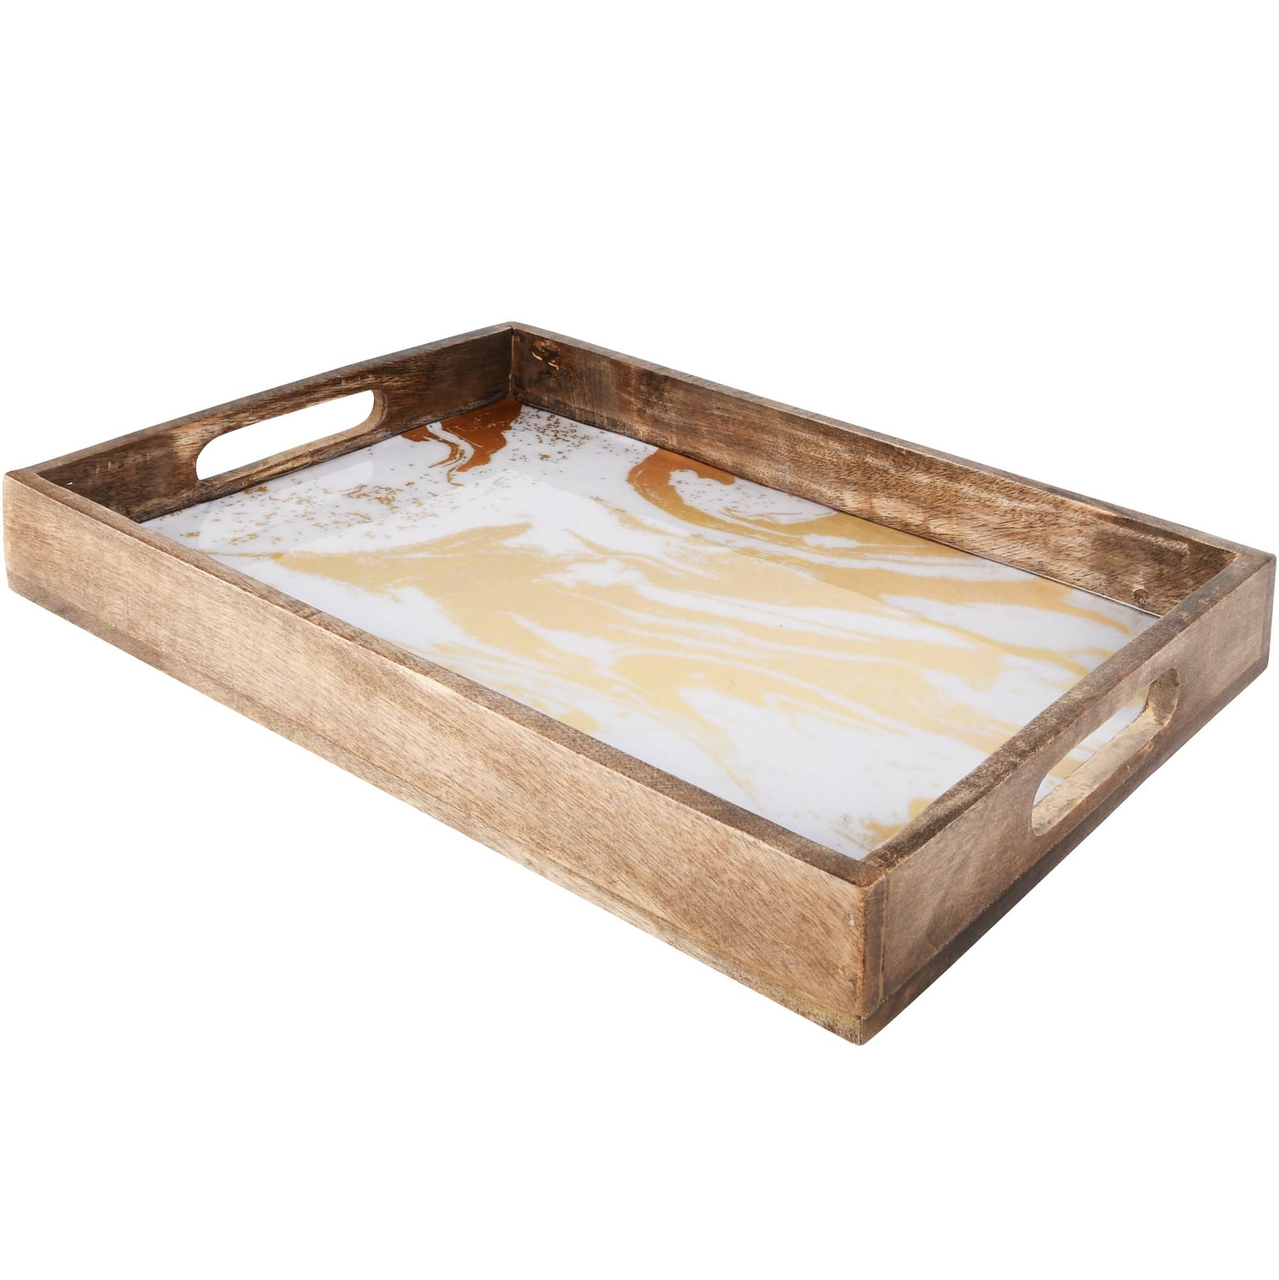 Dekoratief | Dienblad rechthoek 'Marbled', wit/goud, hout, 36x27x5cm | A228089